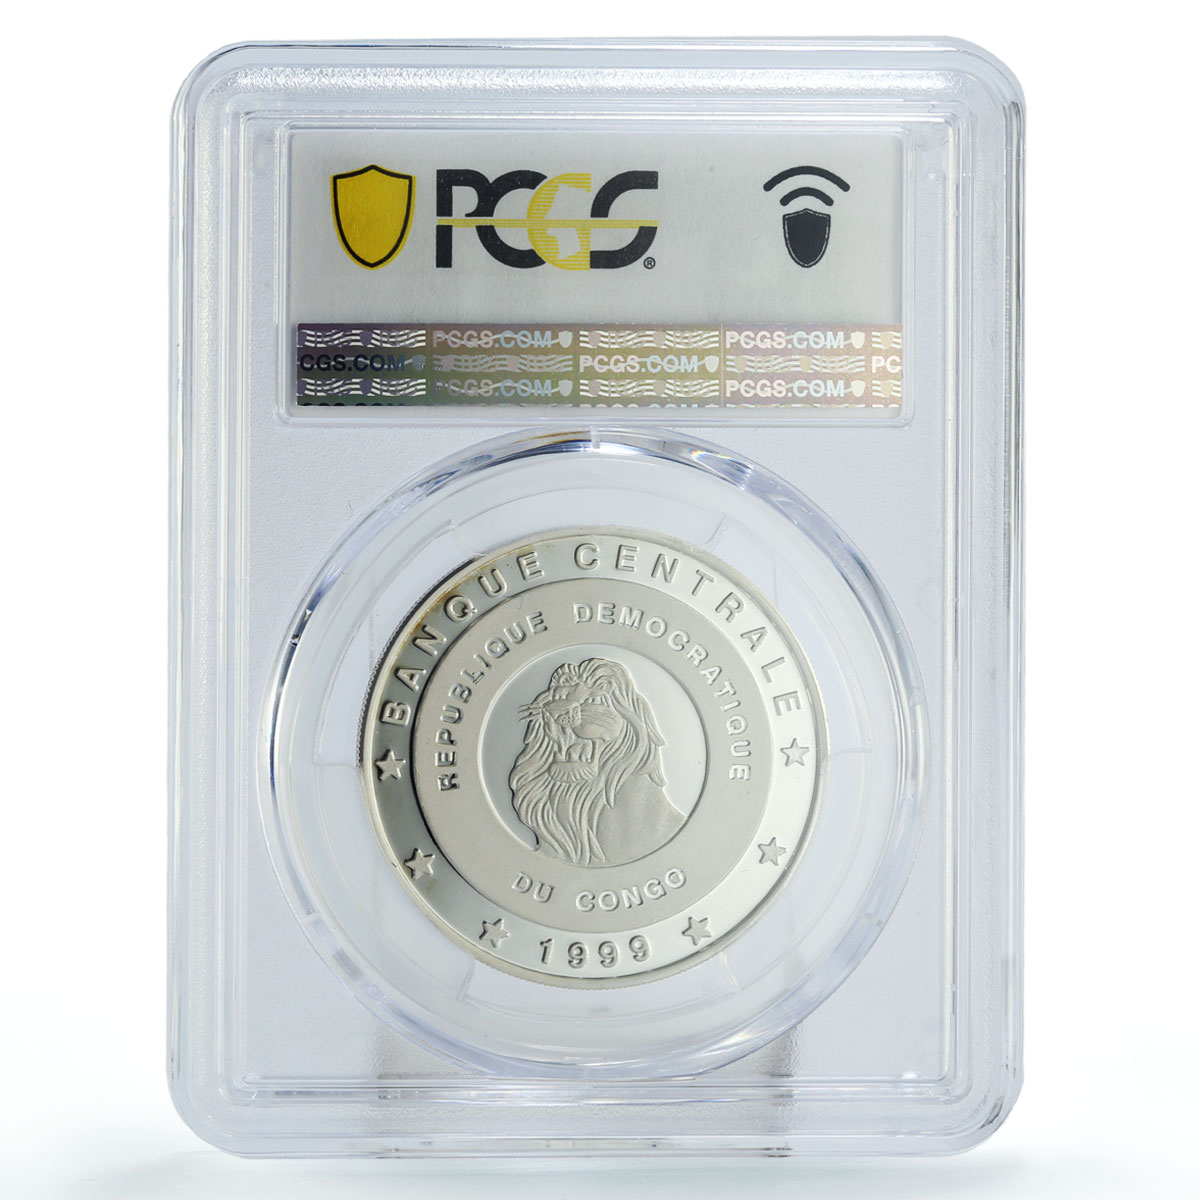 Congo 10 francs Conservation Wildlife Crocodile Fauna PR69 PCGS silver coin 1999